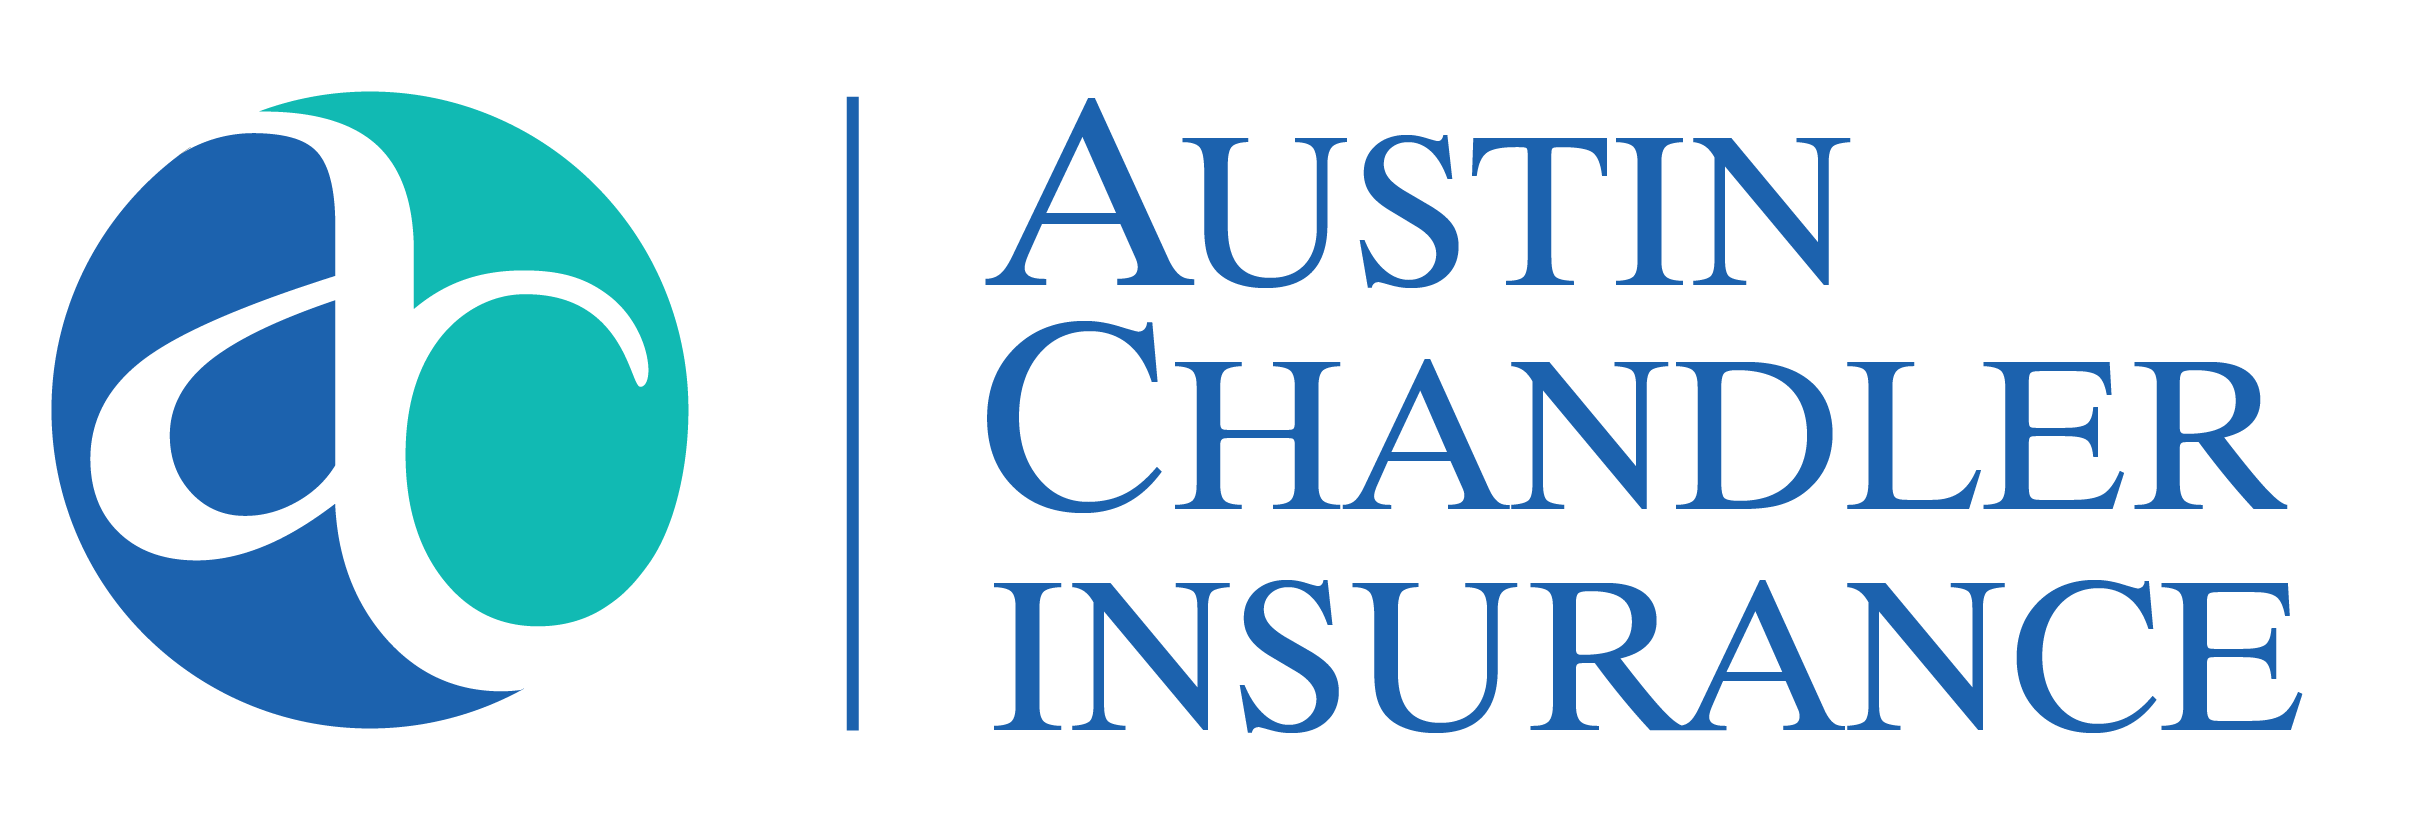 Austin Chandler Insurance